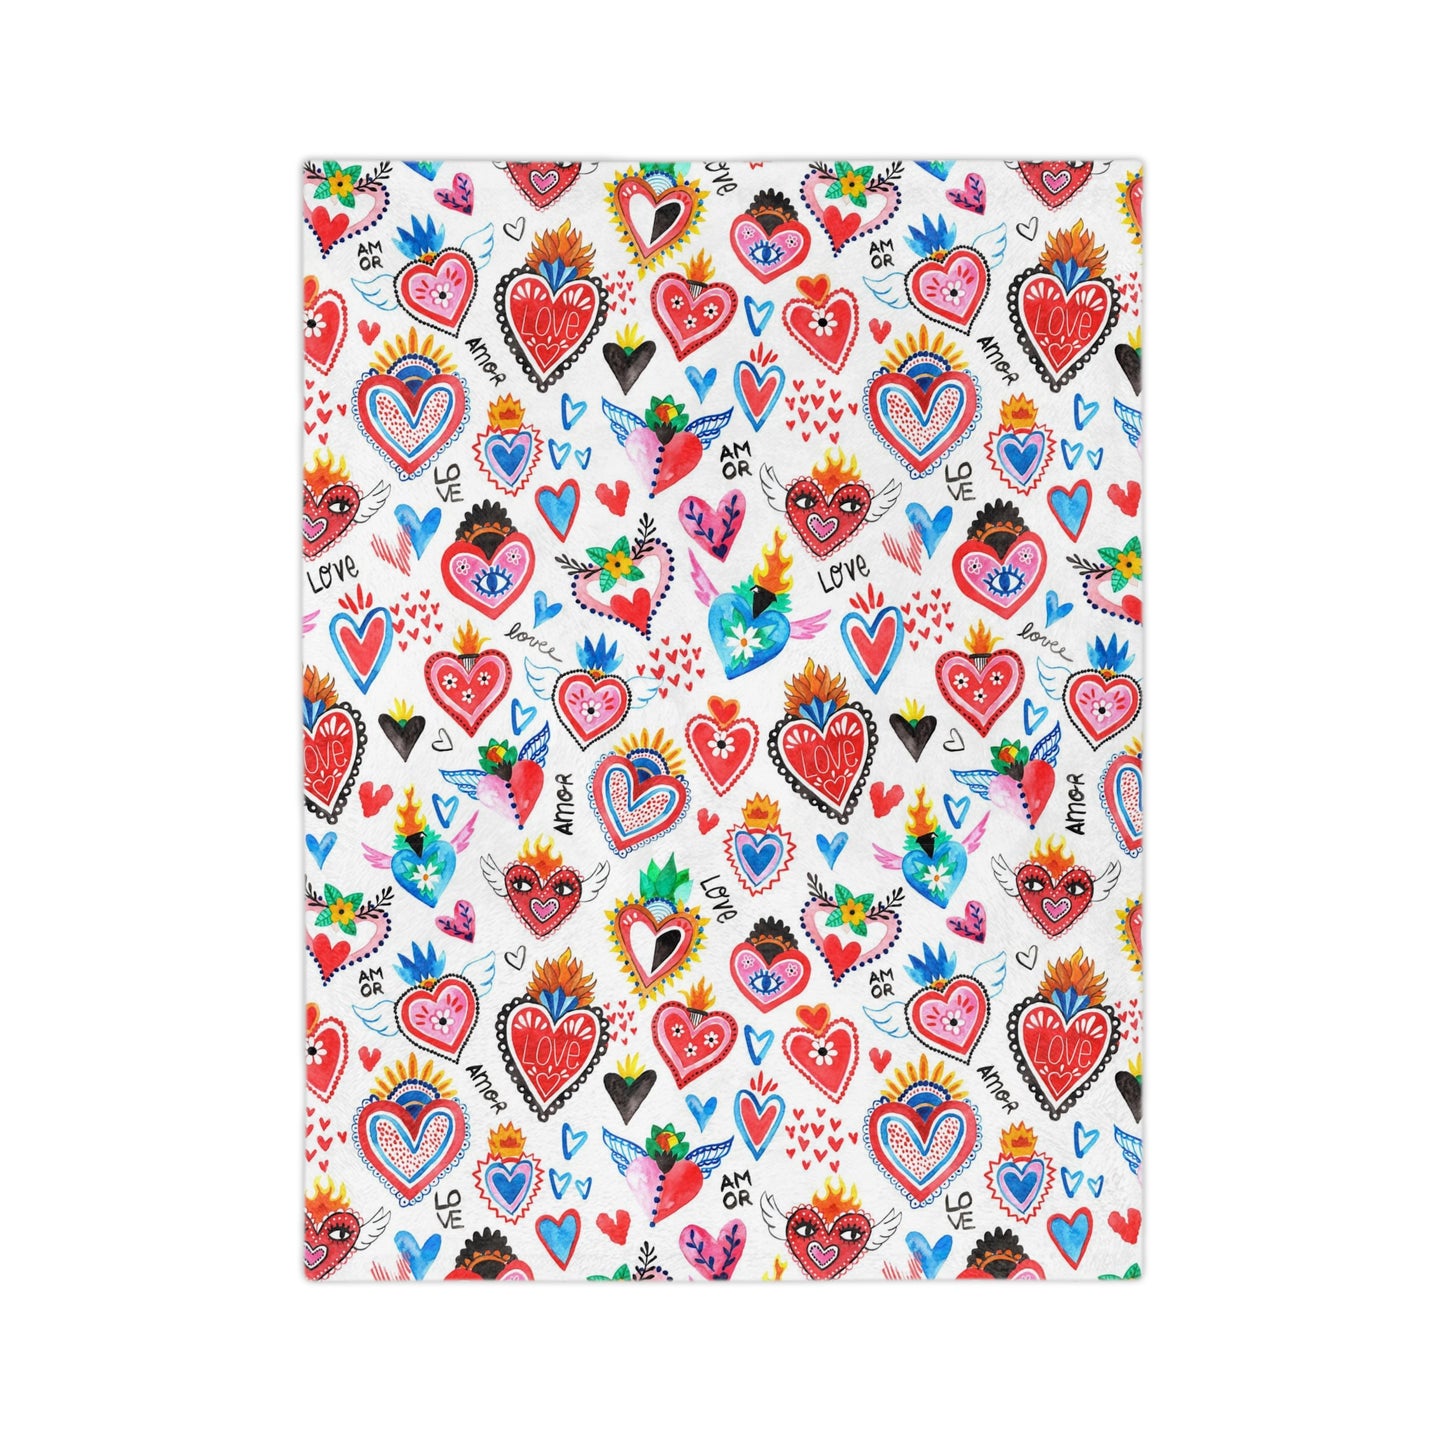 Cute sacred hearts Velveteen Minky Blanket. Sagrado corazon blanket for her. Mexican folk art